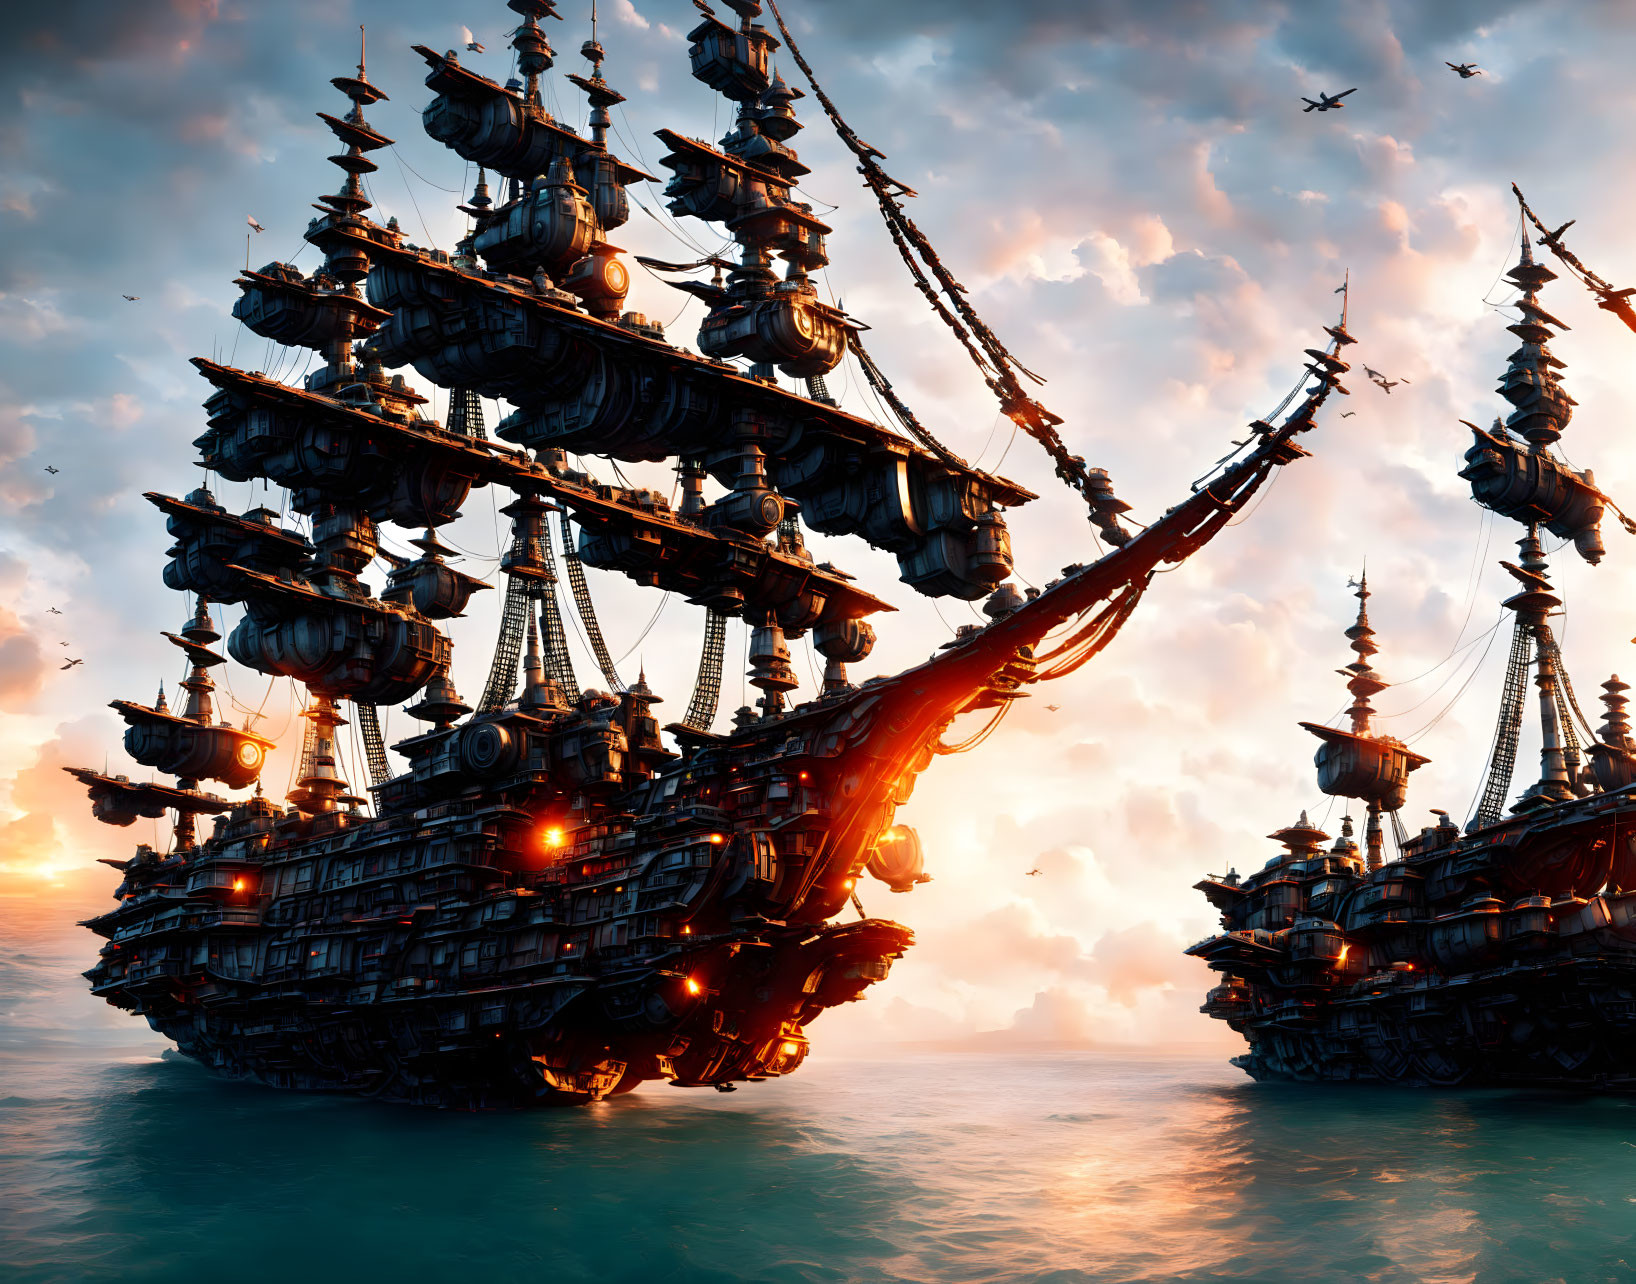 Majestic pirate ships battle at sea under dramatic sunset sky